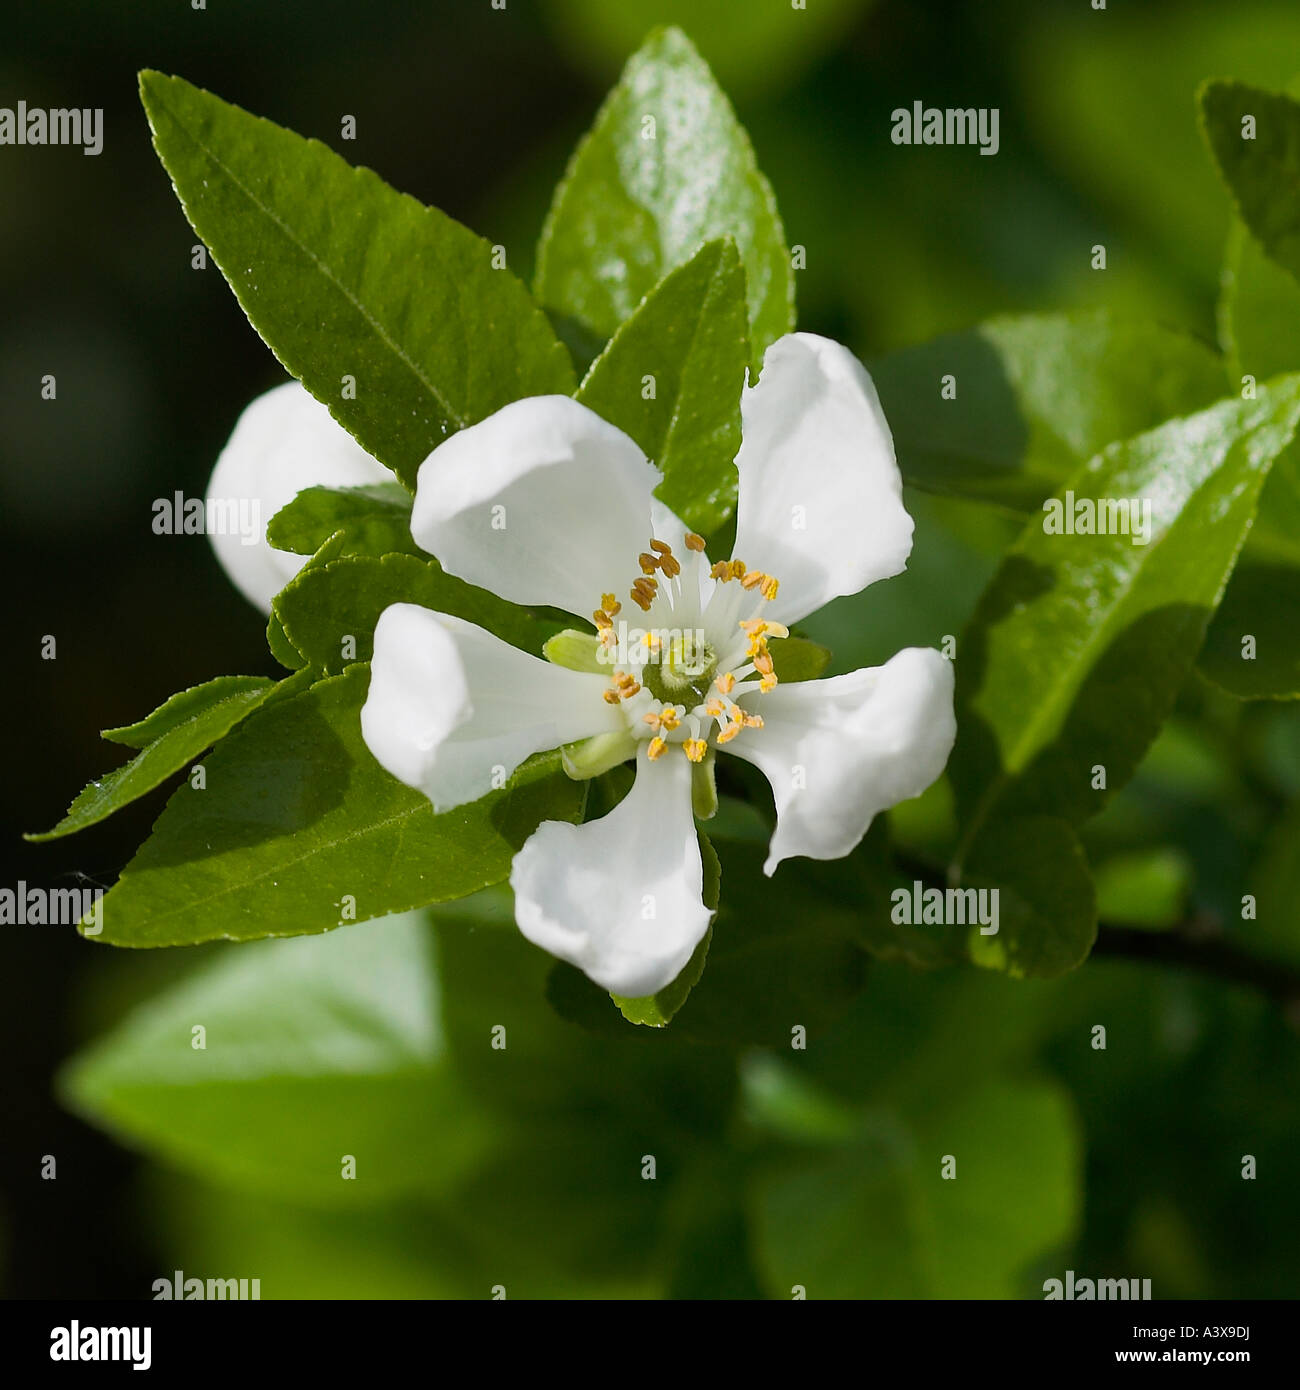 Poncirus trifoliata x Citrus sinensis Carrizo Citrange flower close-up and leaves Stock Photo